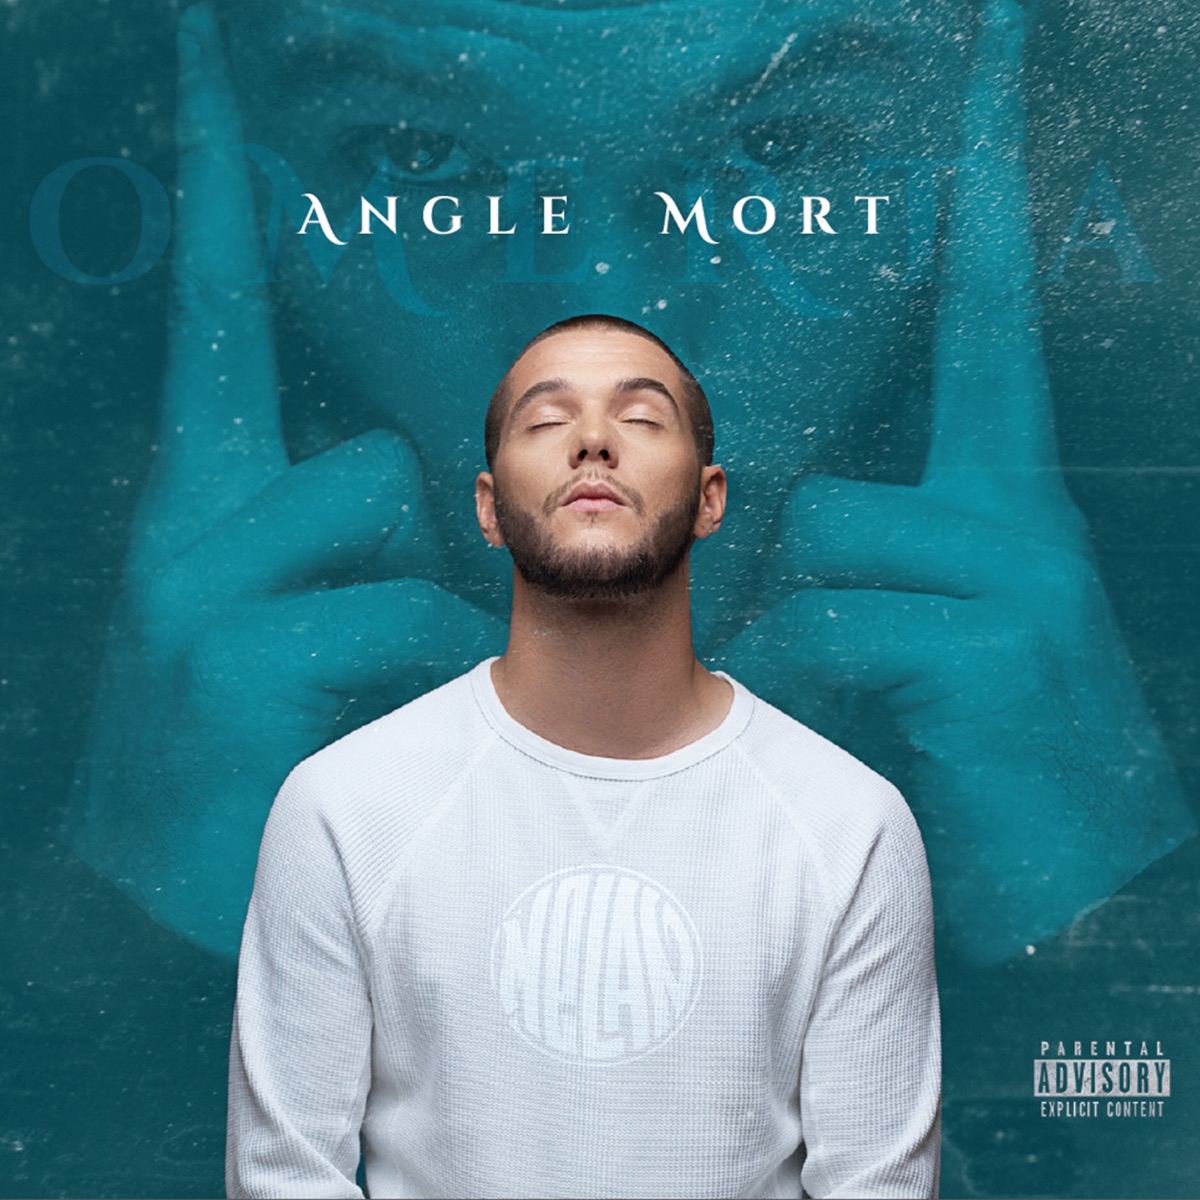 Angle mort - Album by Melan - Apple Music